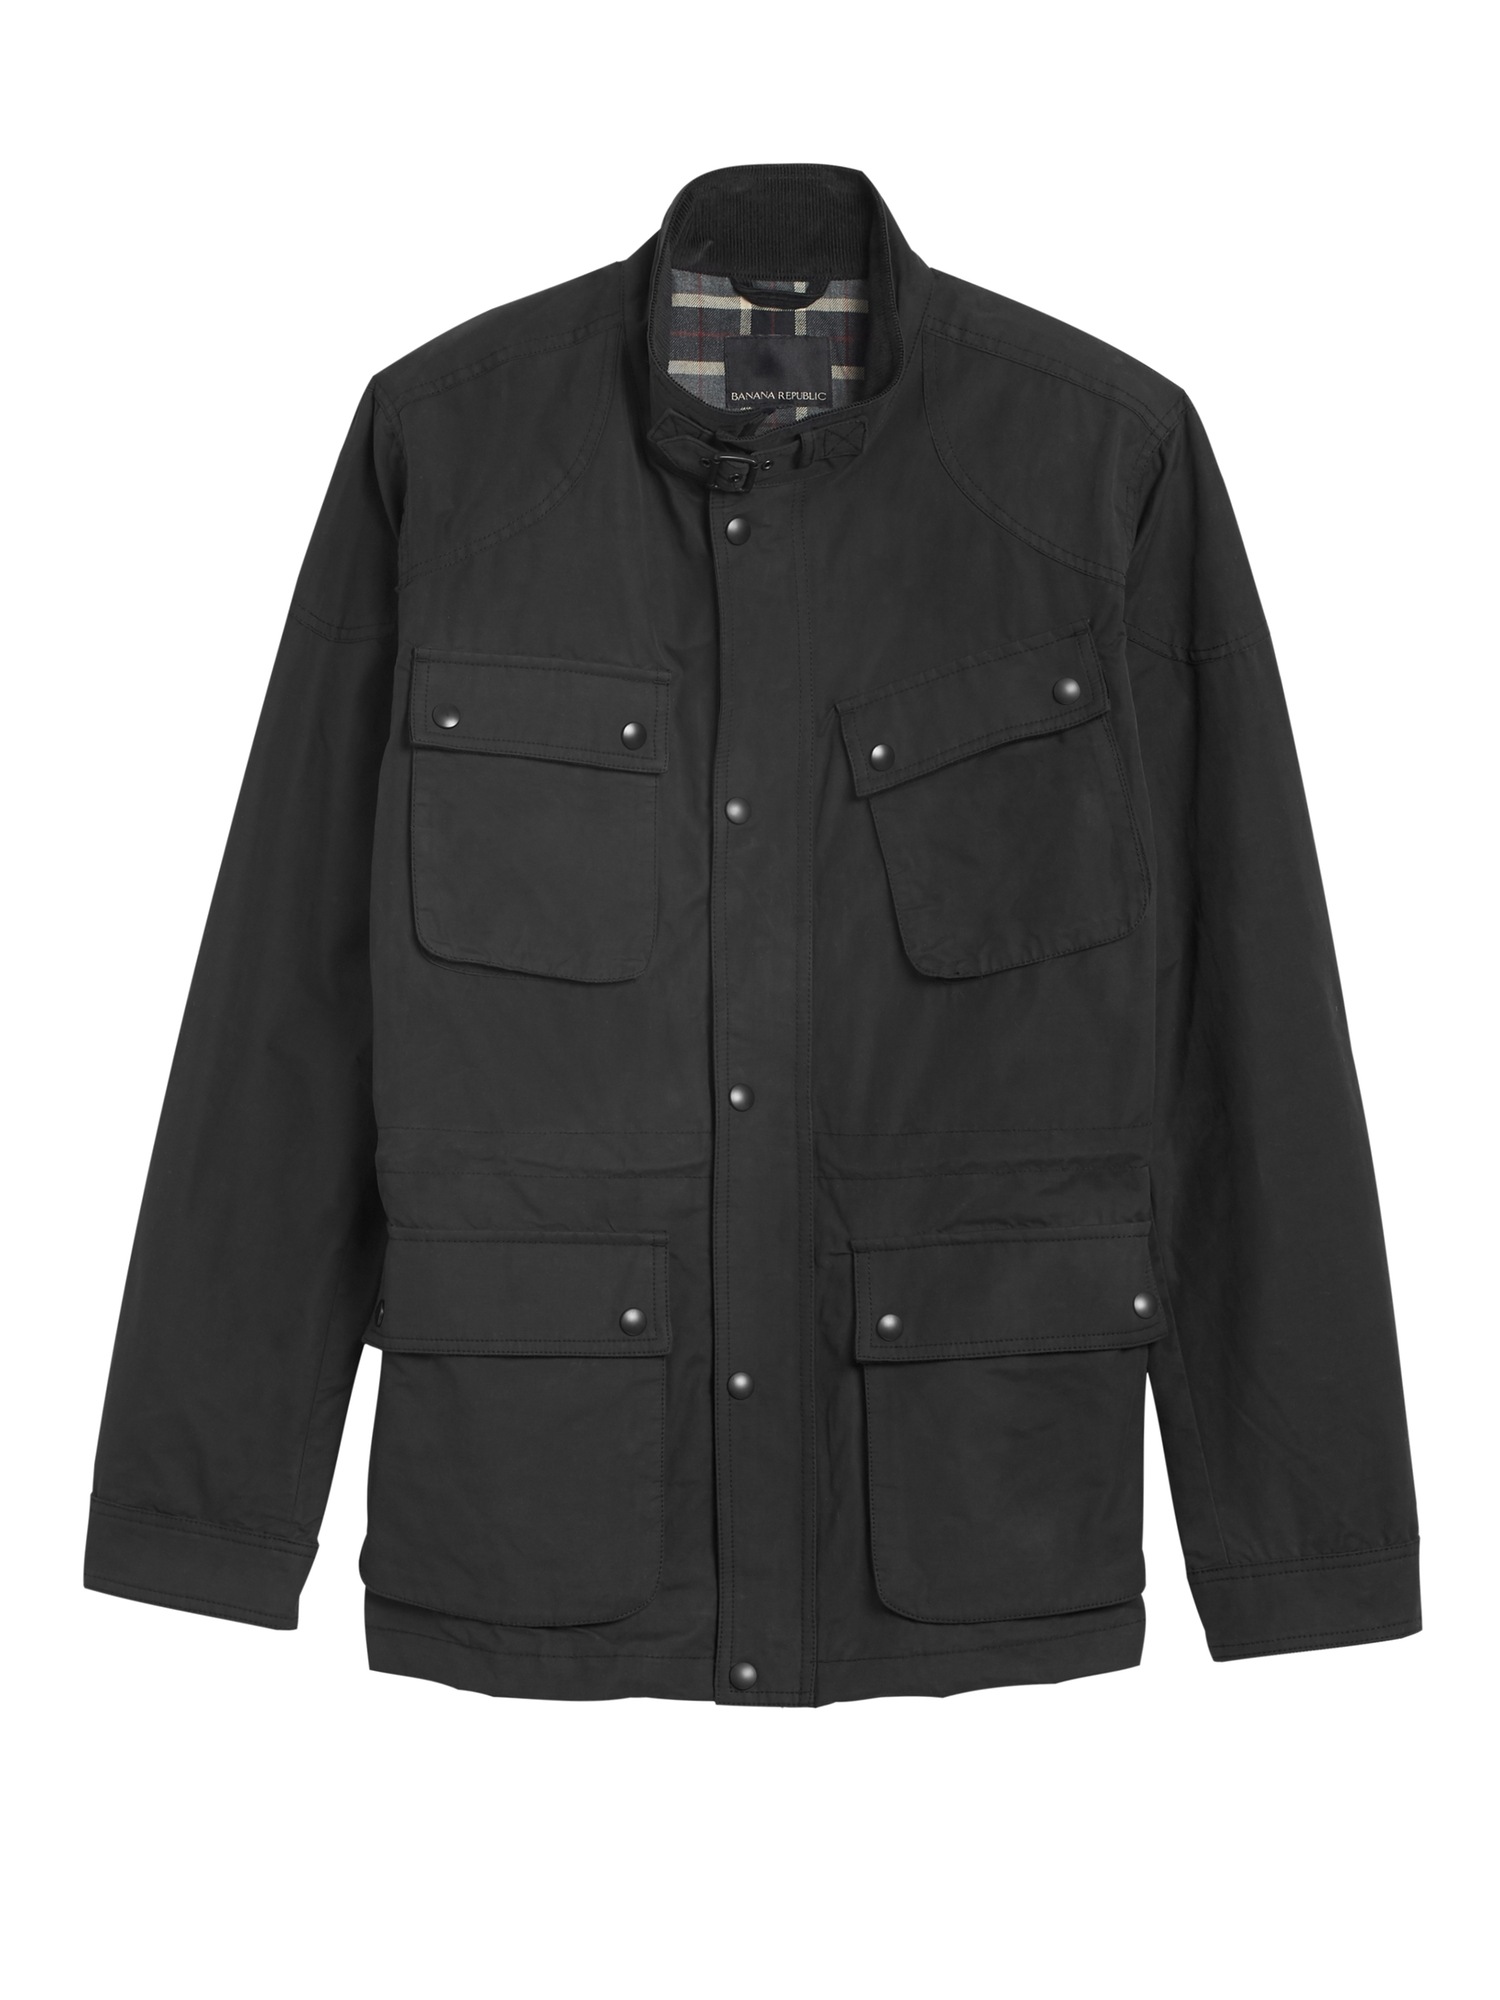 Gap Jacket RN54023 Button Down Black Color Pockets Size S water resistance